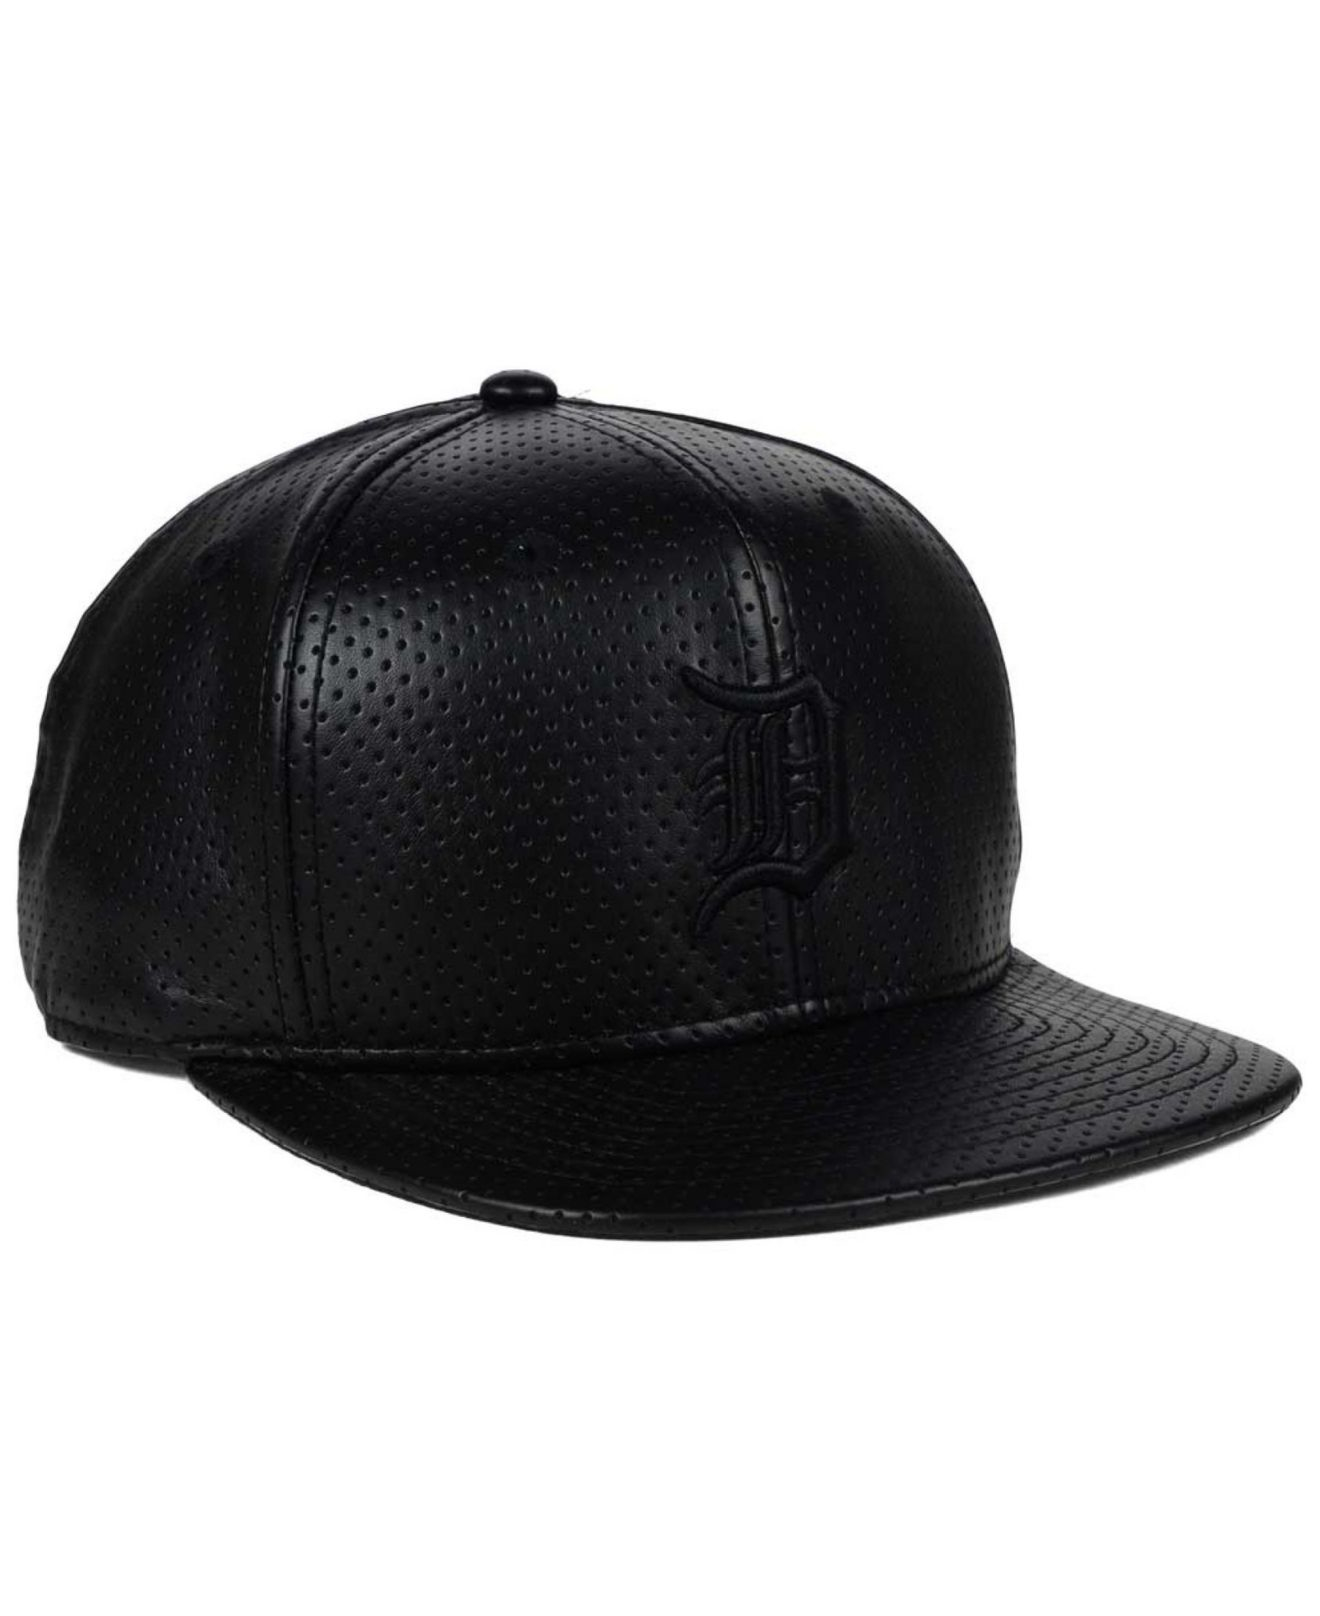 Men's Detroit Tigers Fanatics Branded Black Snapback Hat